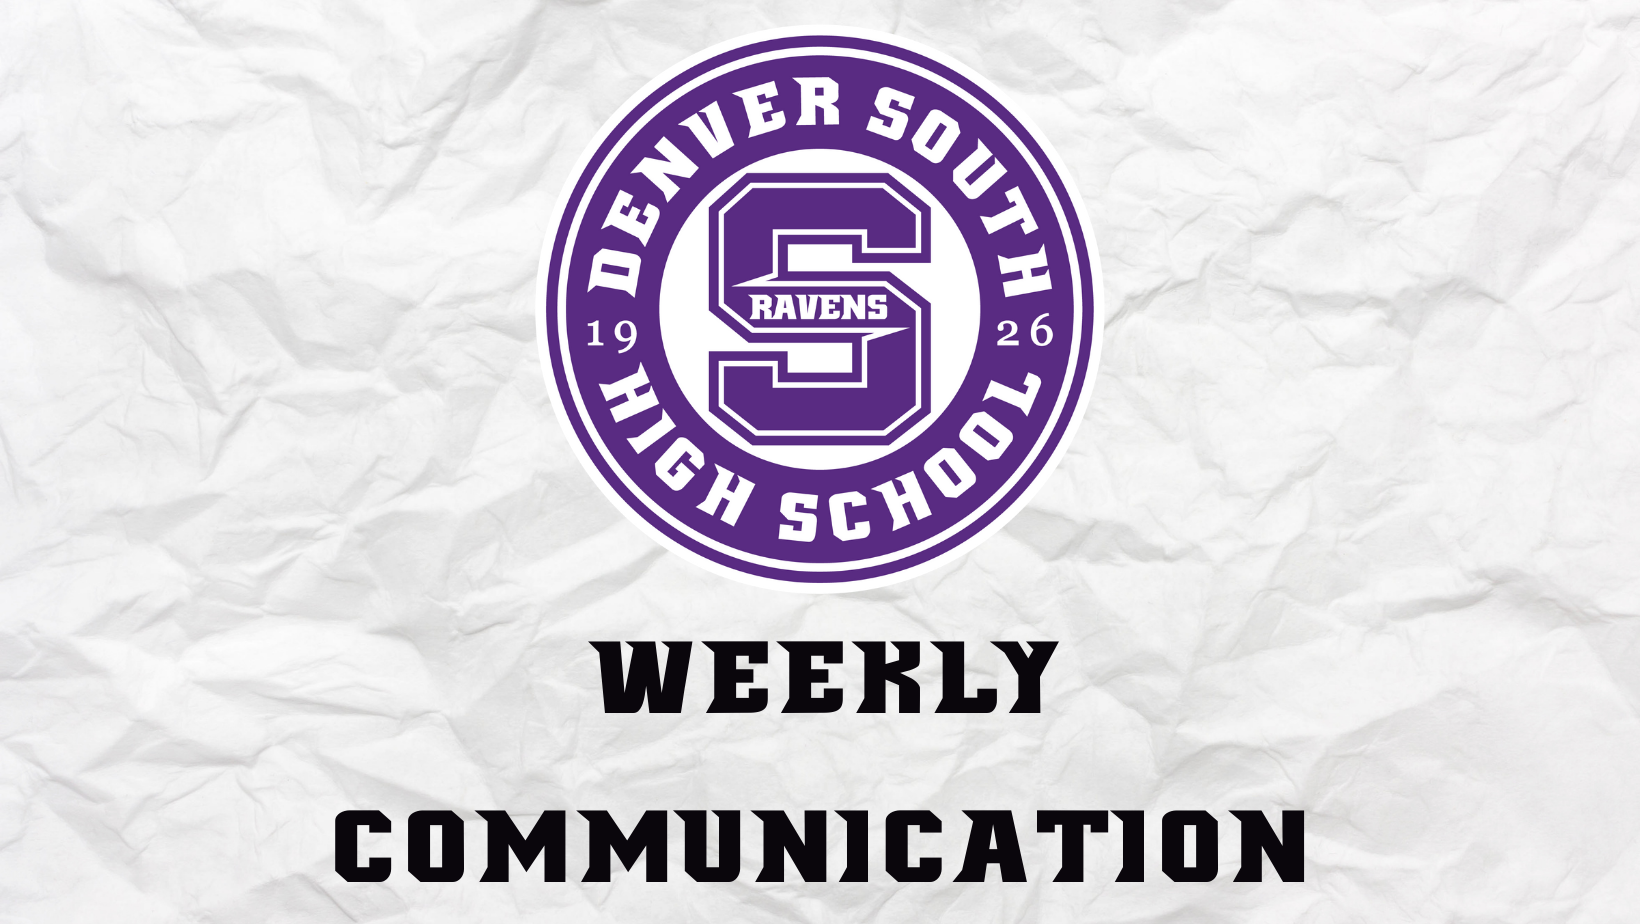 Denver South High School » Weekly Communication 20.20